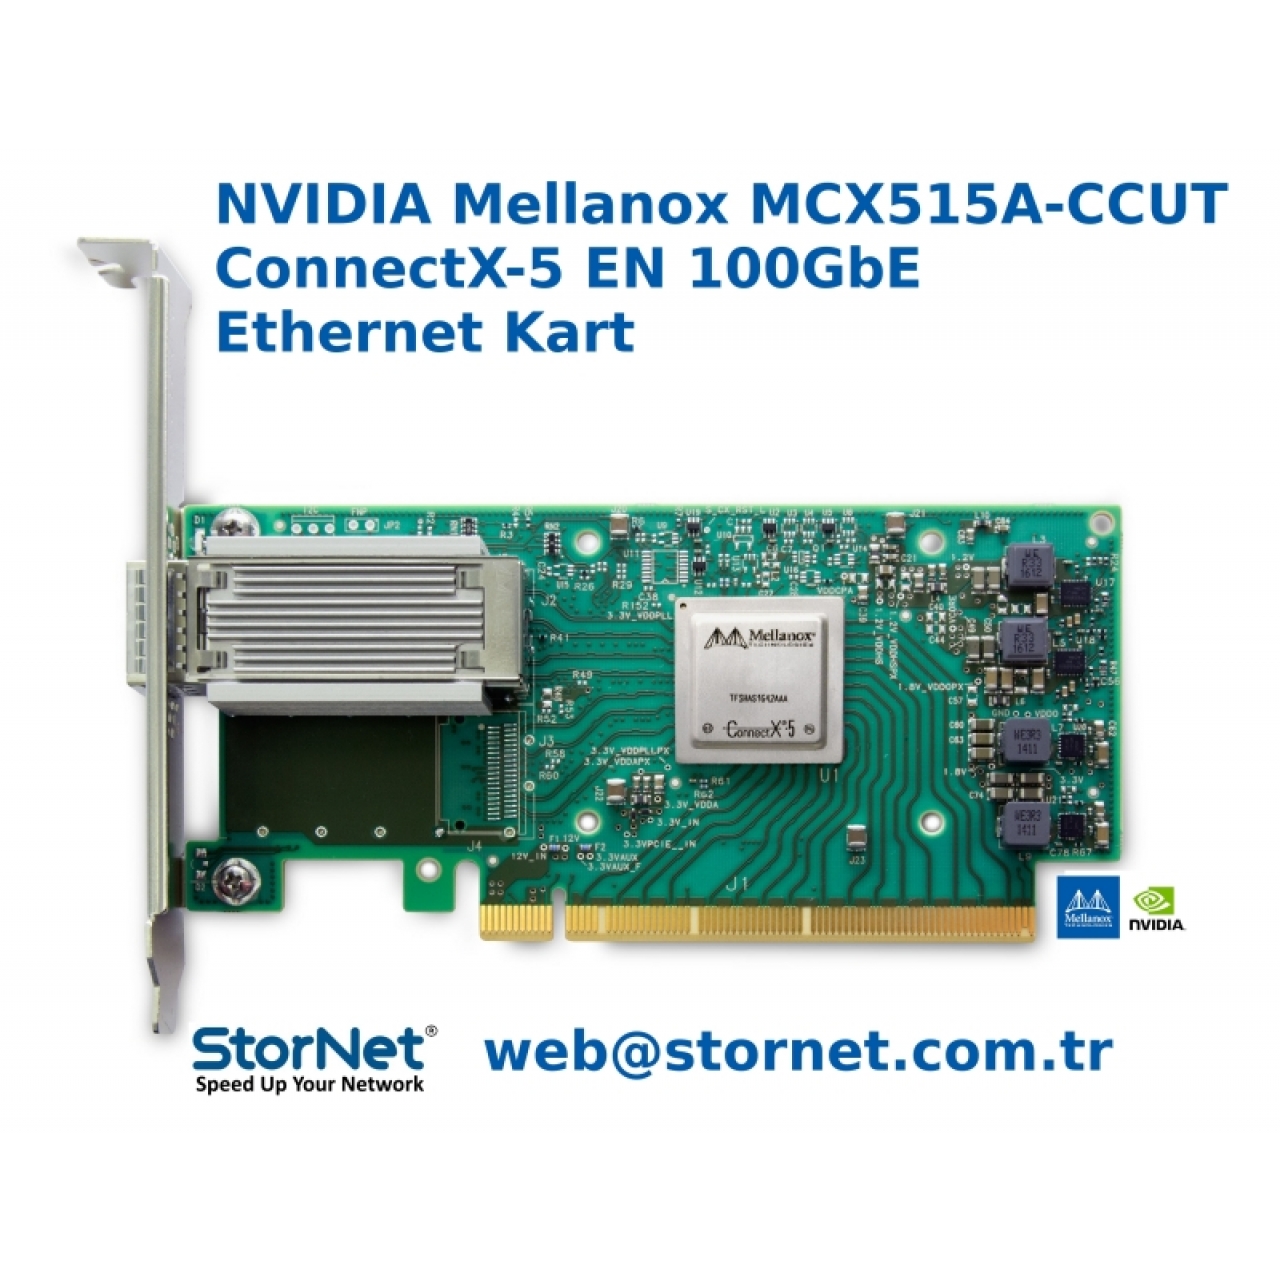 NVIDIA Mellanox MCX515A-CCUT ConnectX-5 EN 100GbE Ethernet Kart 